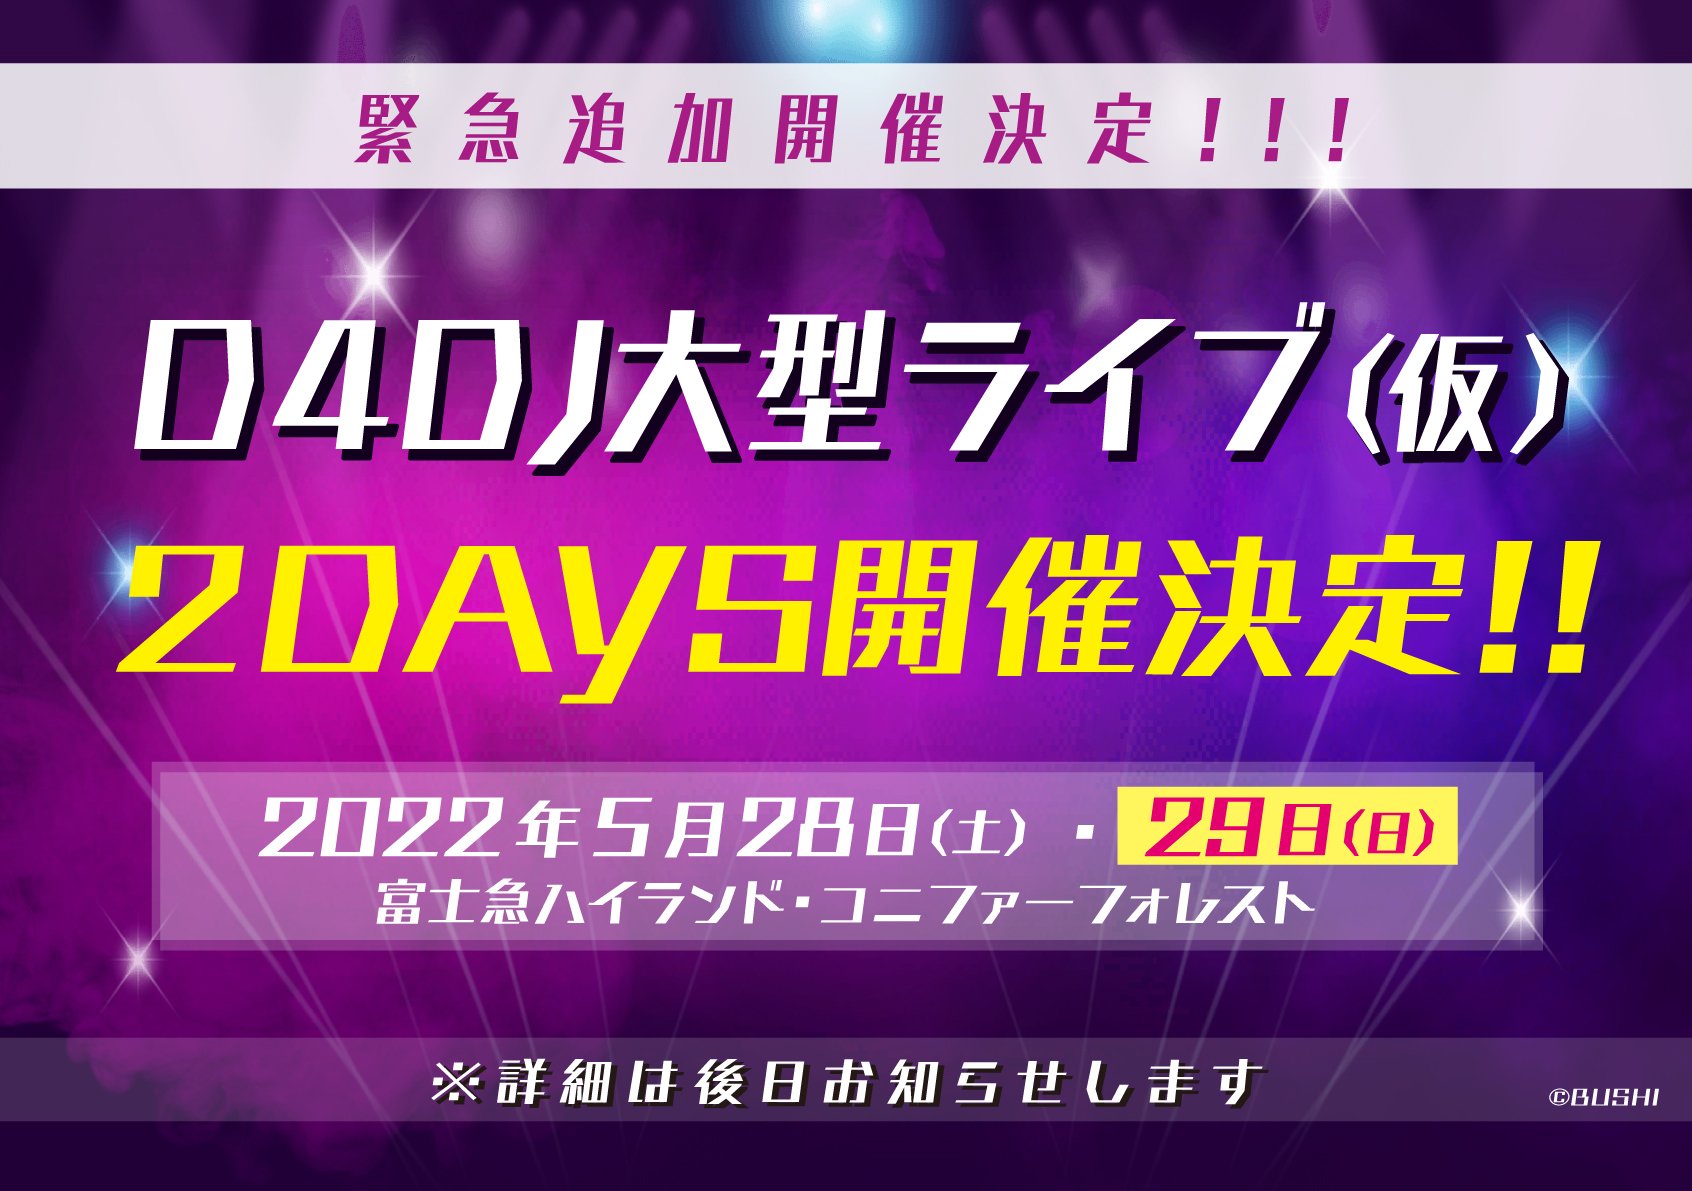 D4DJ 大型ライブ(仮) 